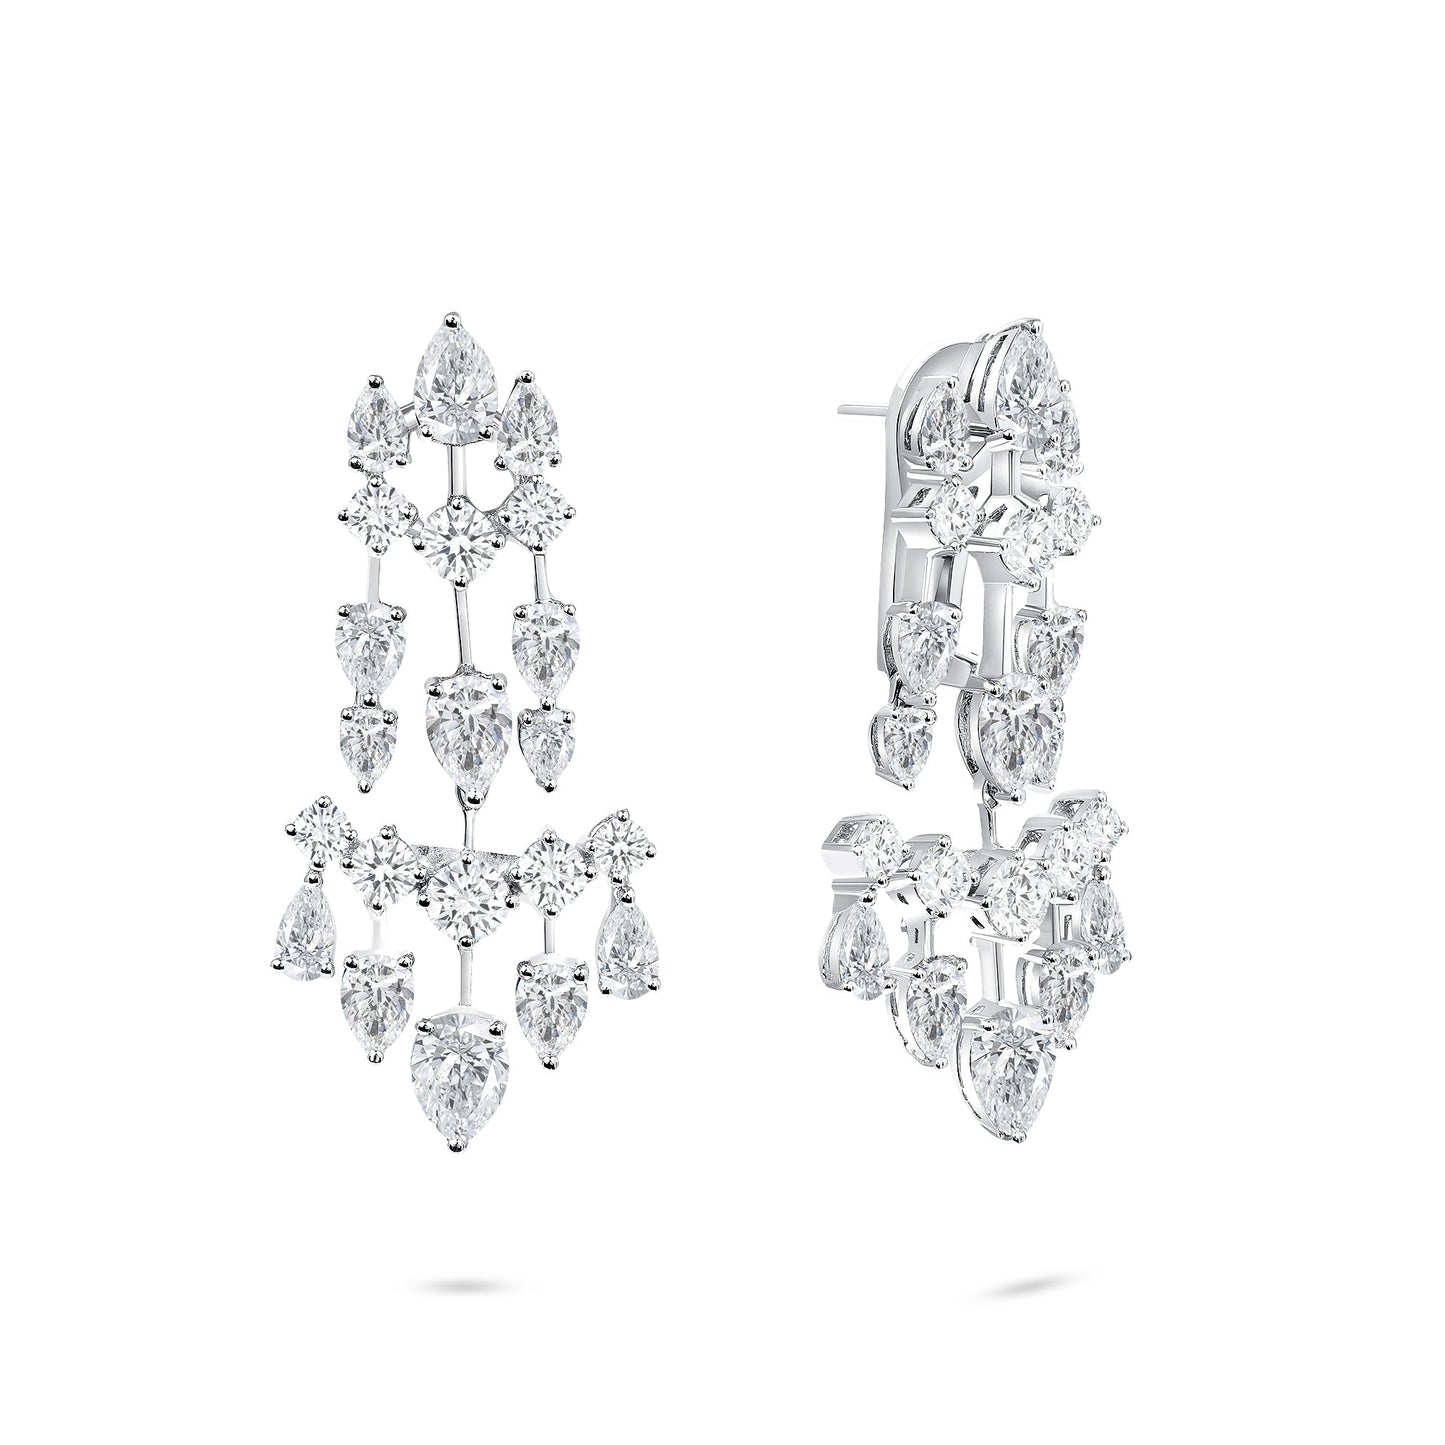 The Opulent Diamond Statement Earrings